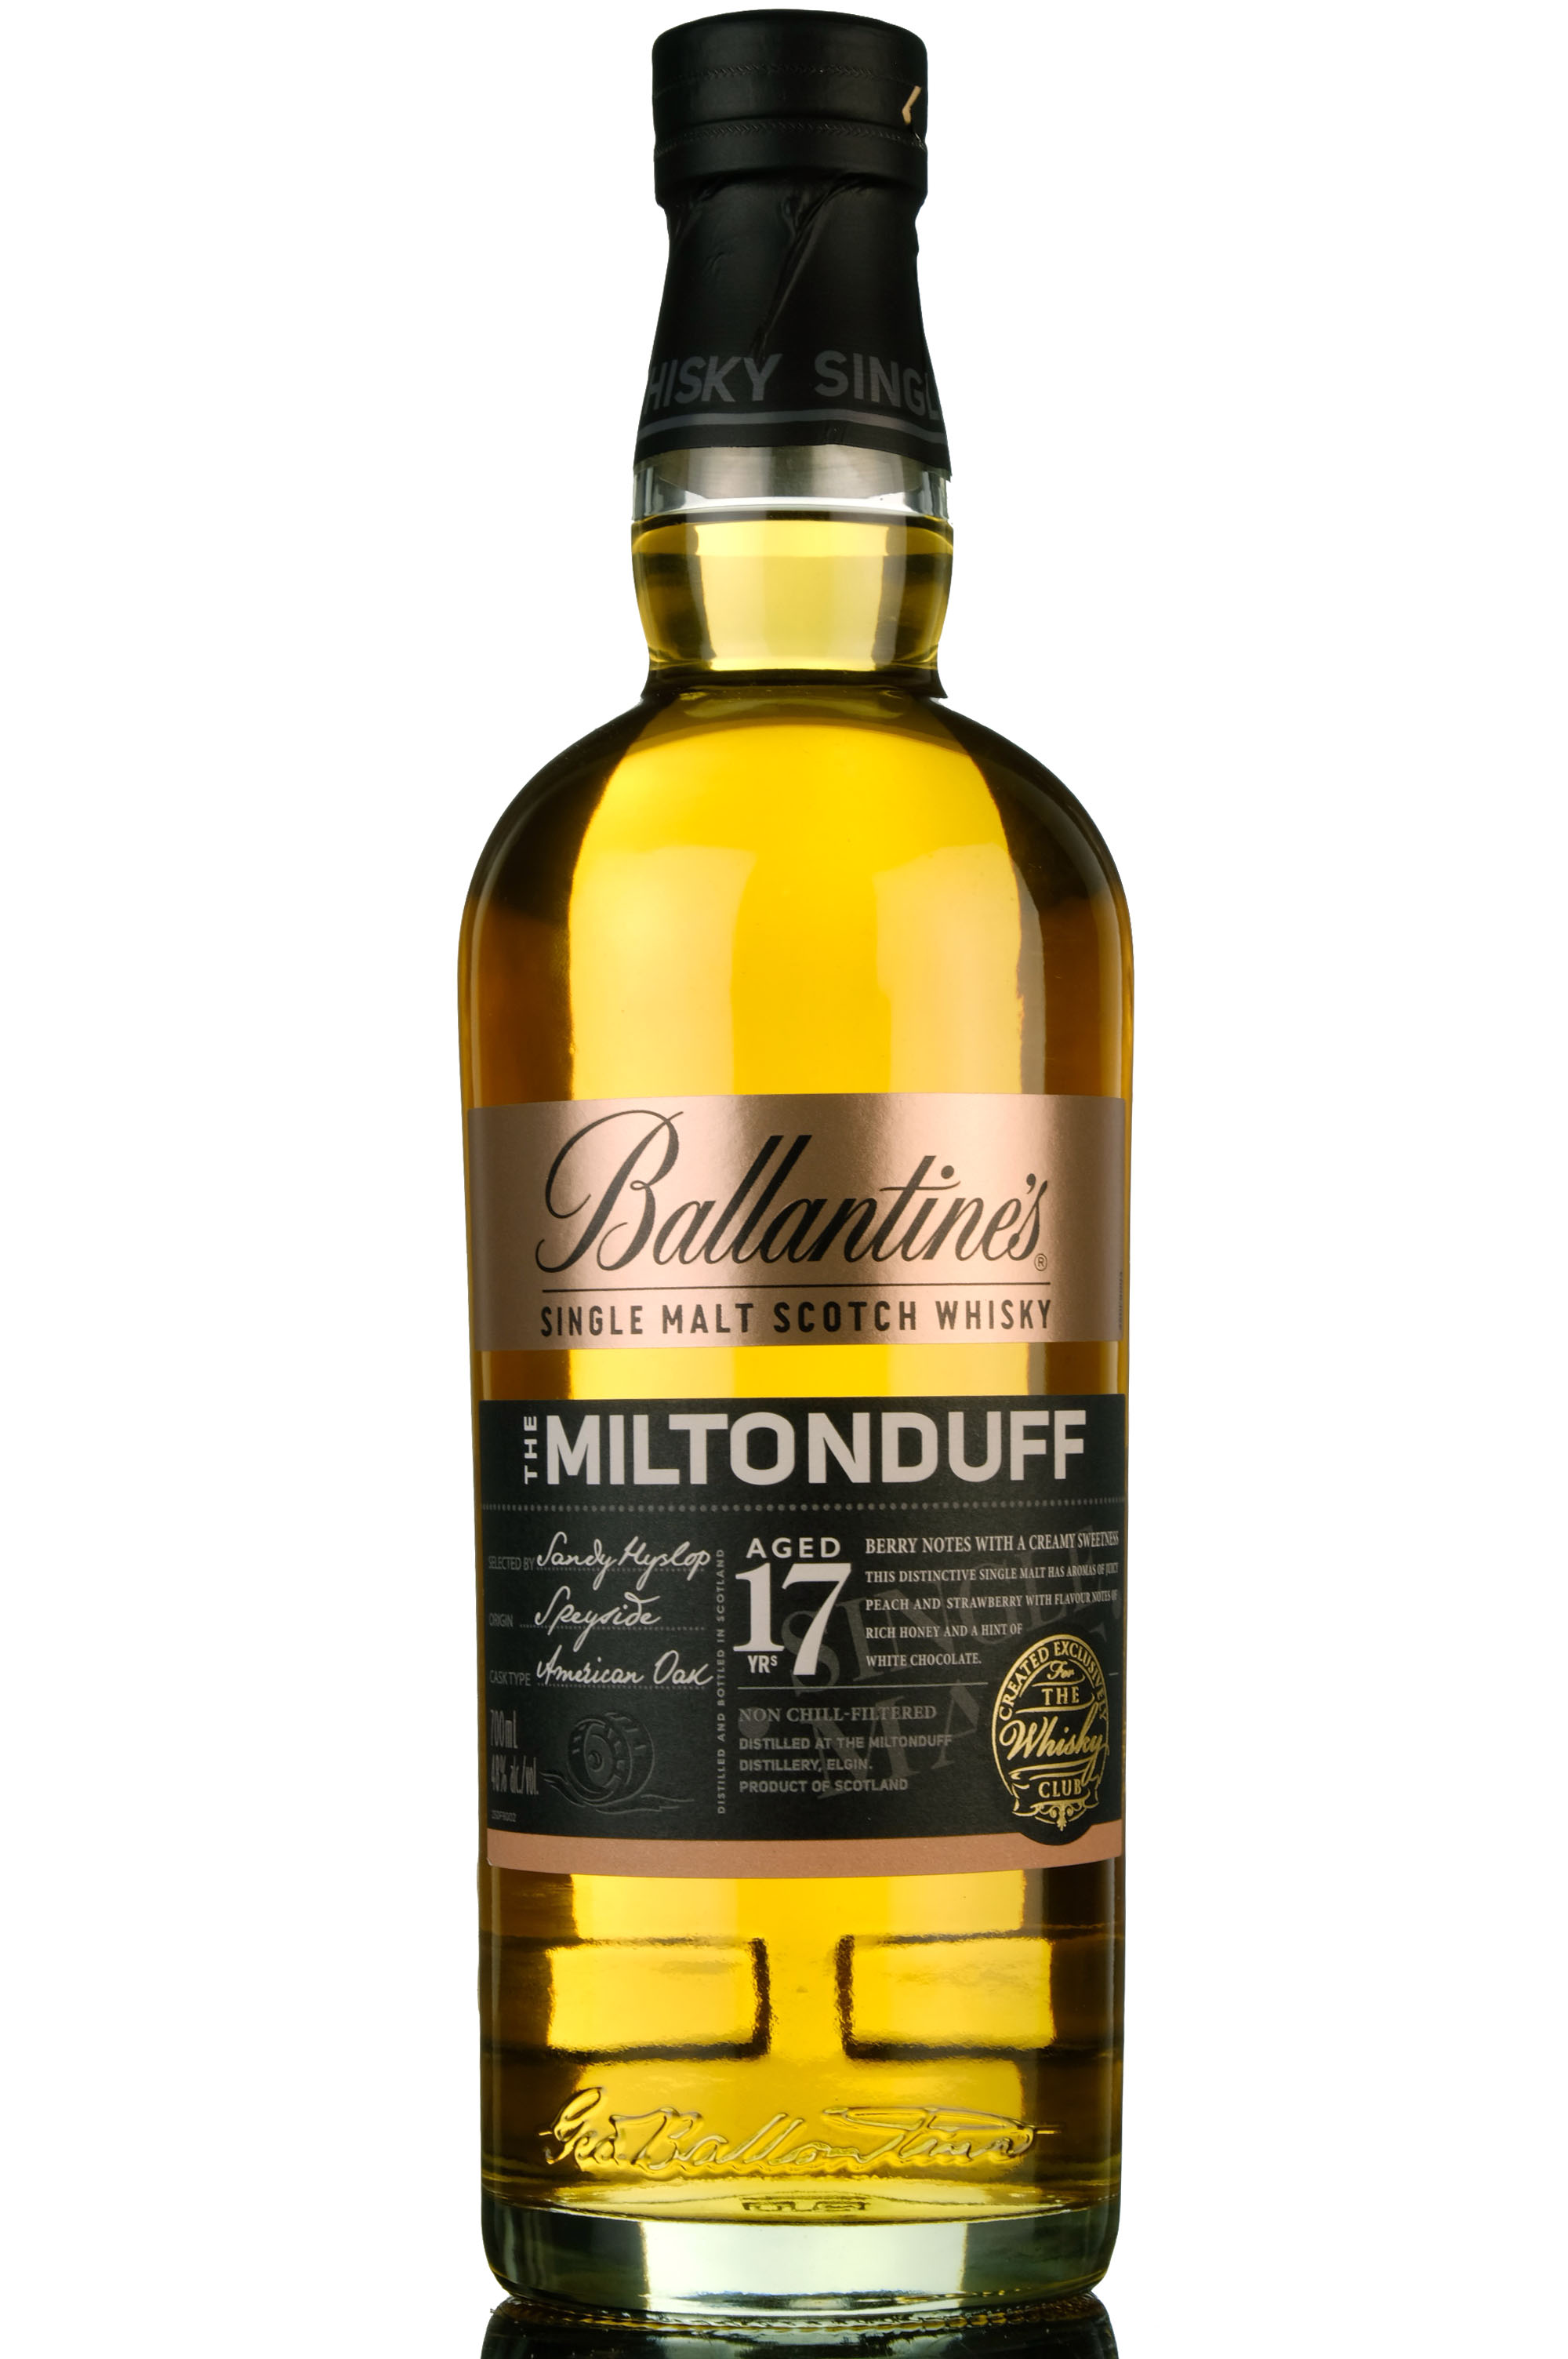 Miltonduff 17 Year Old - Ballantines - 2022 Release - The Whisky Club Exclusive Australia